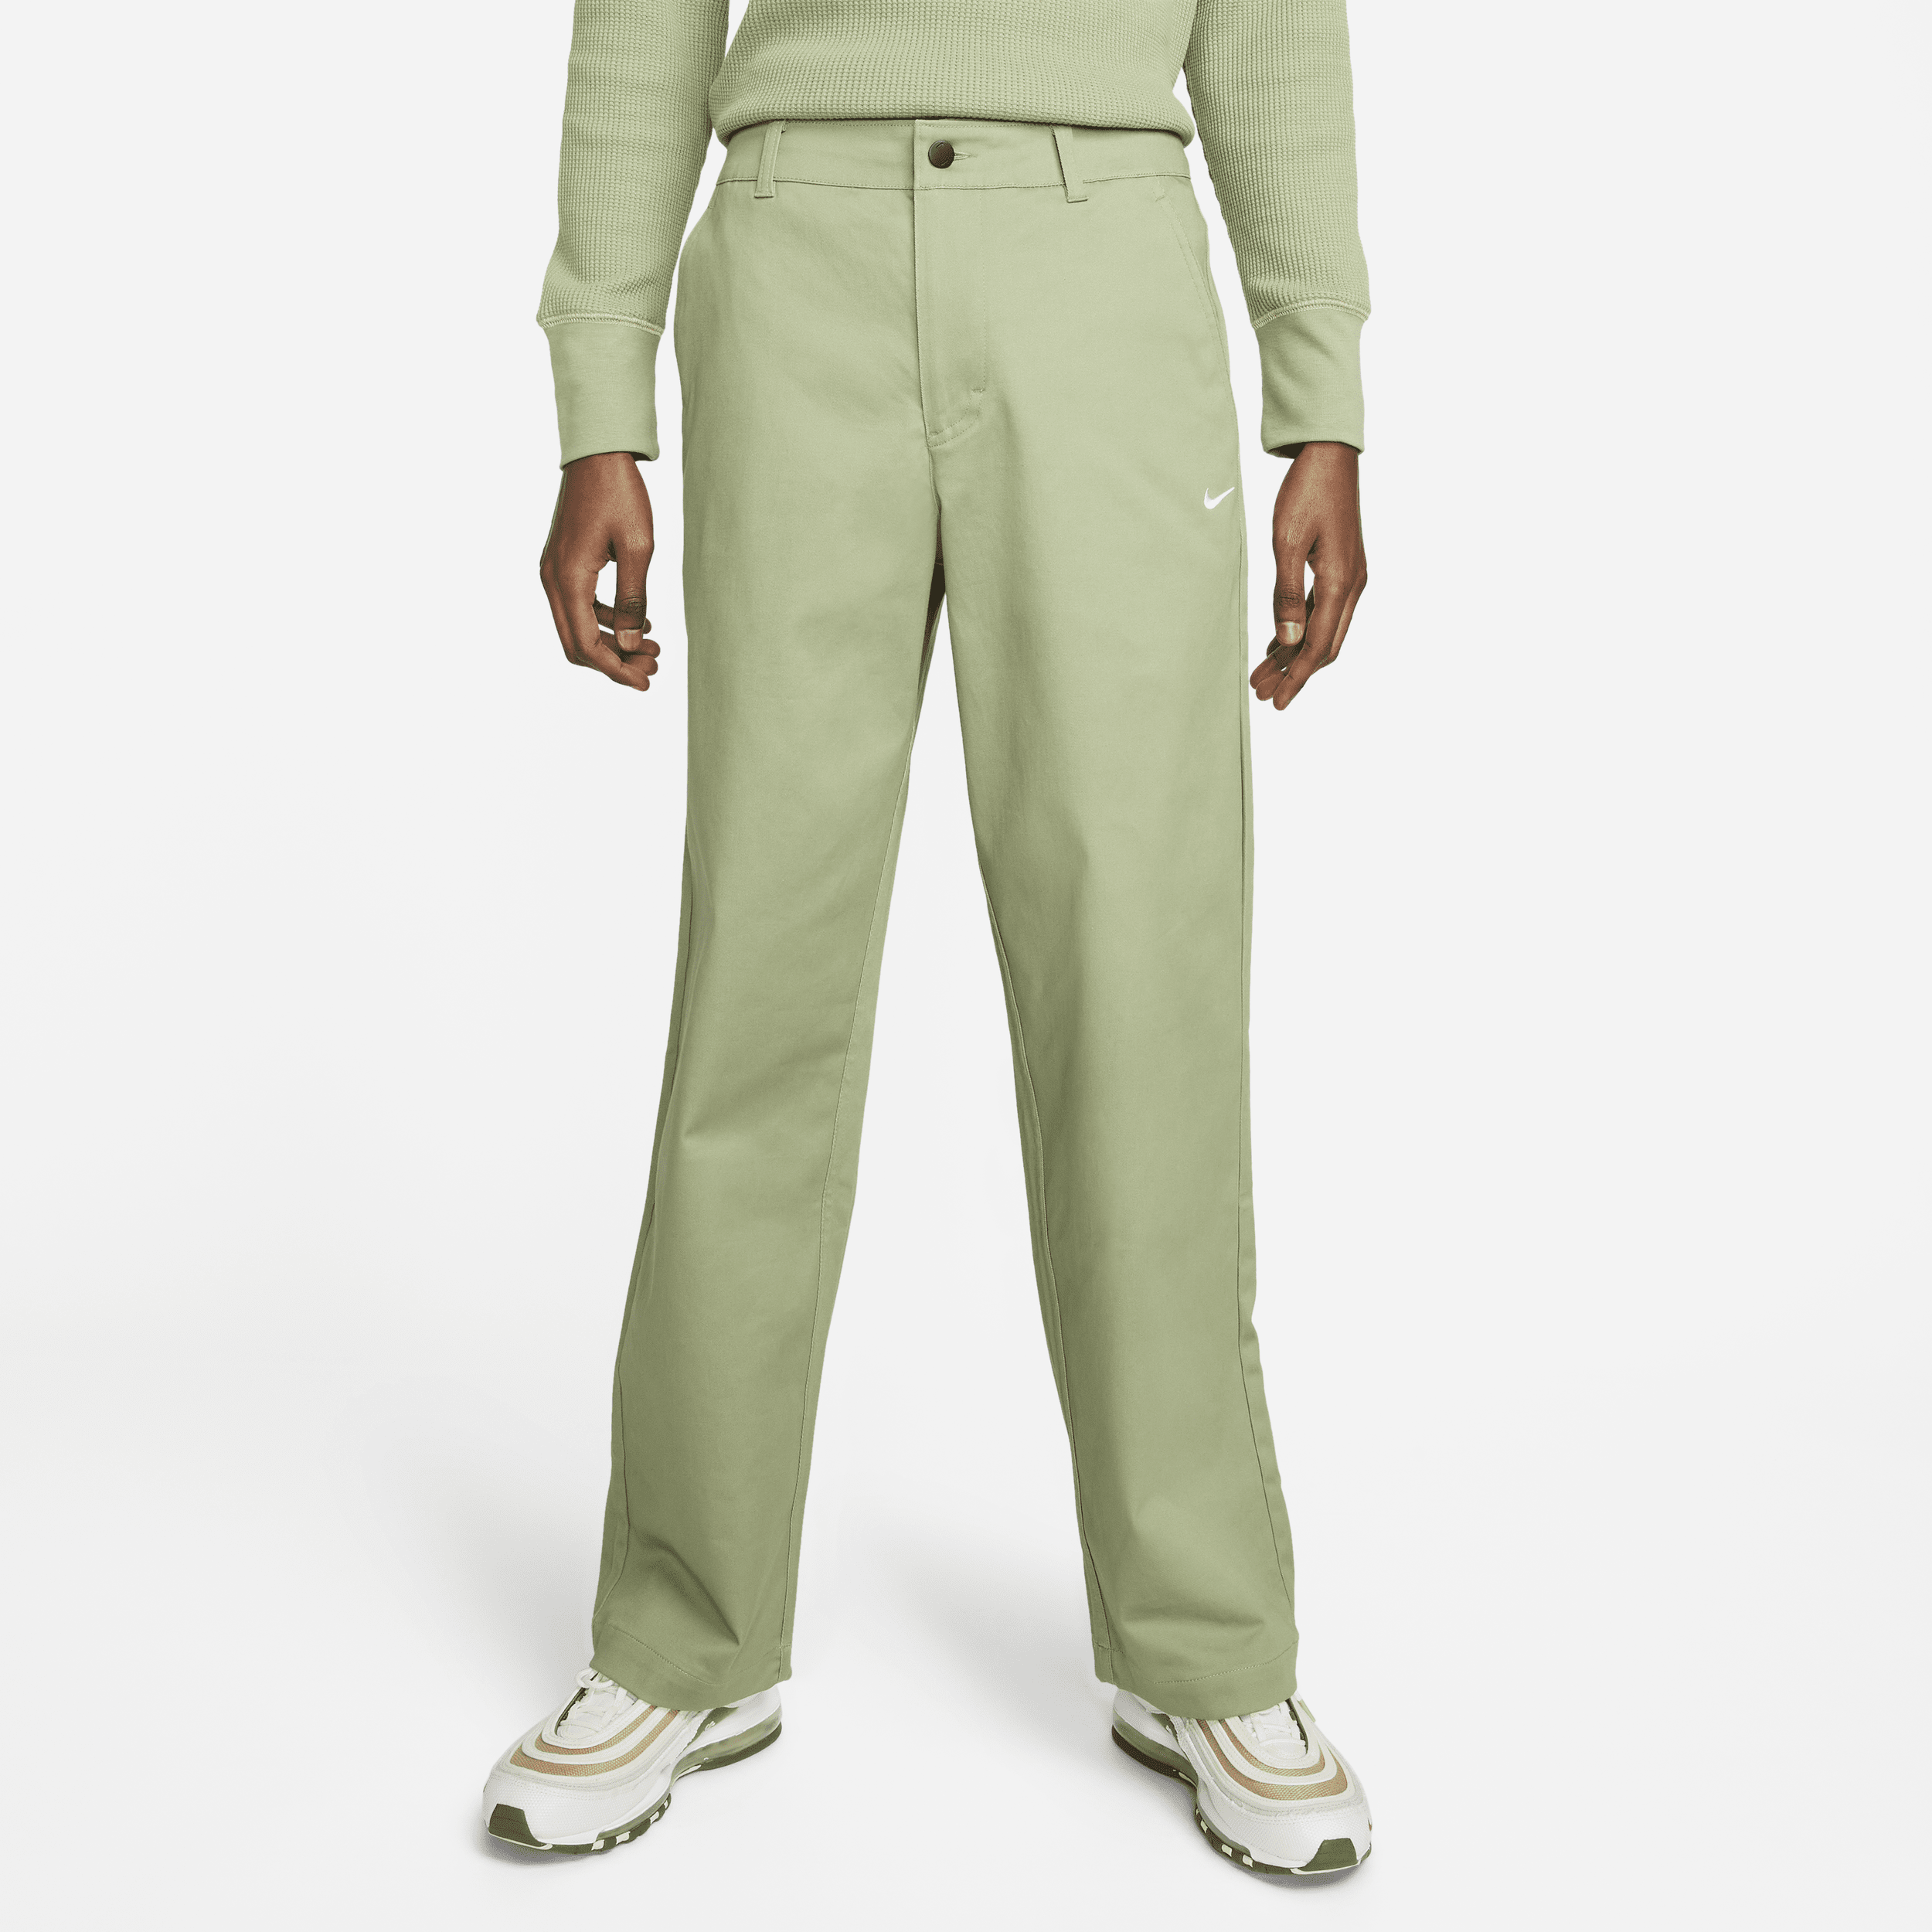 Pantaloni El Chino Nike Life – Uomo - Verde